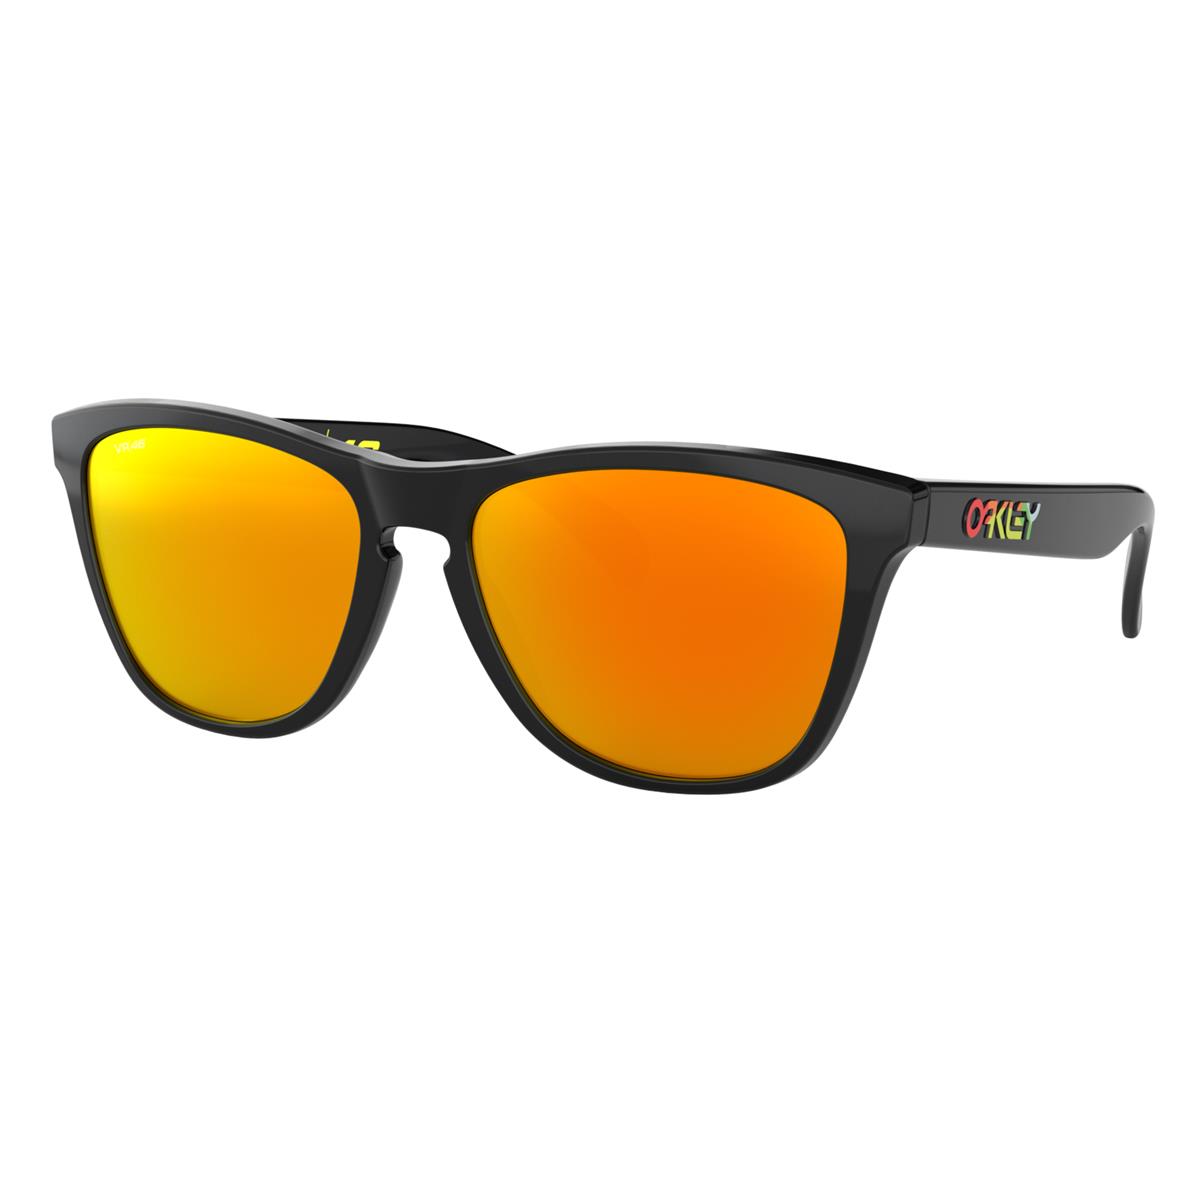 Oakley Sunglasses Frogskins Polished Black - Fire Iridium